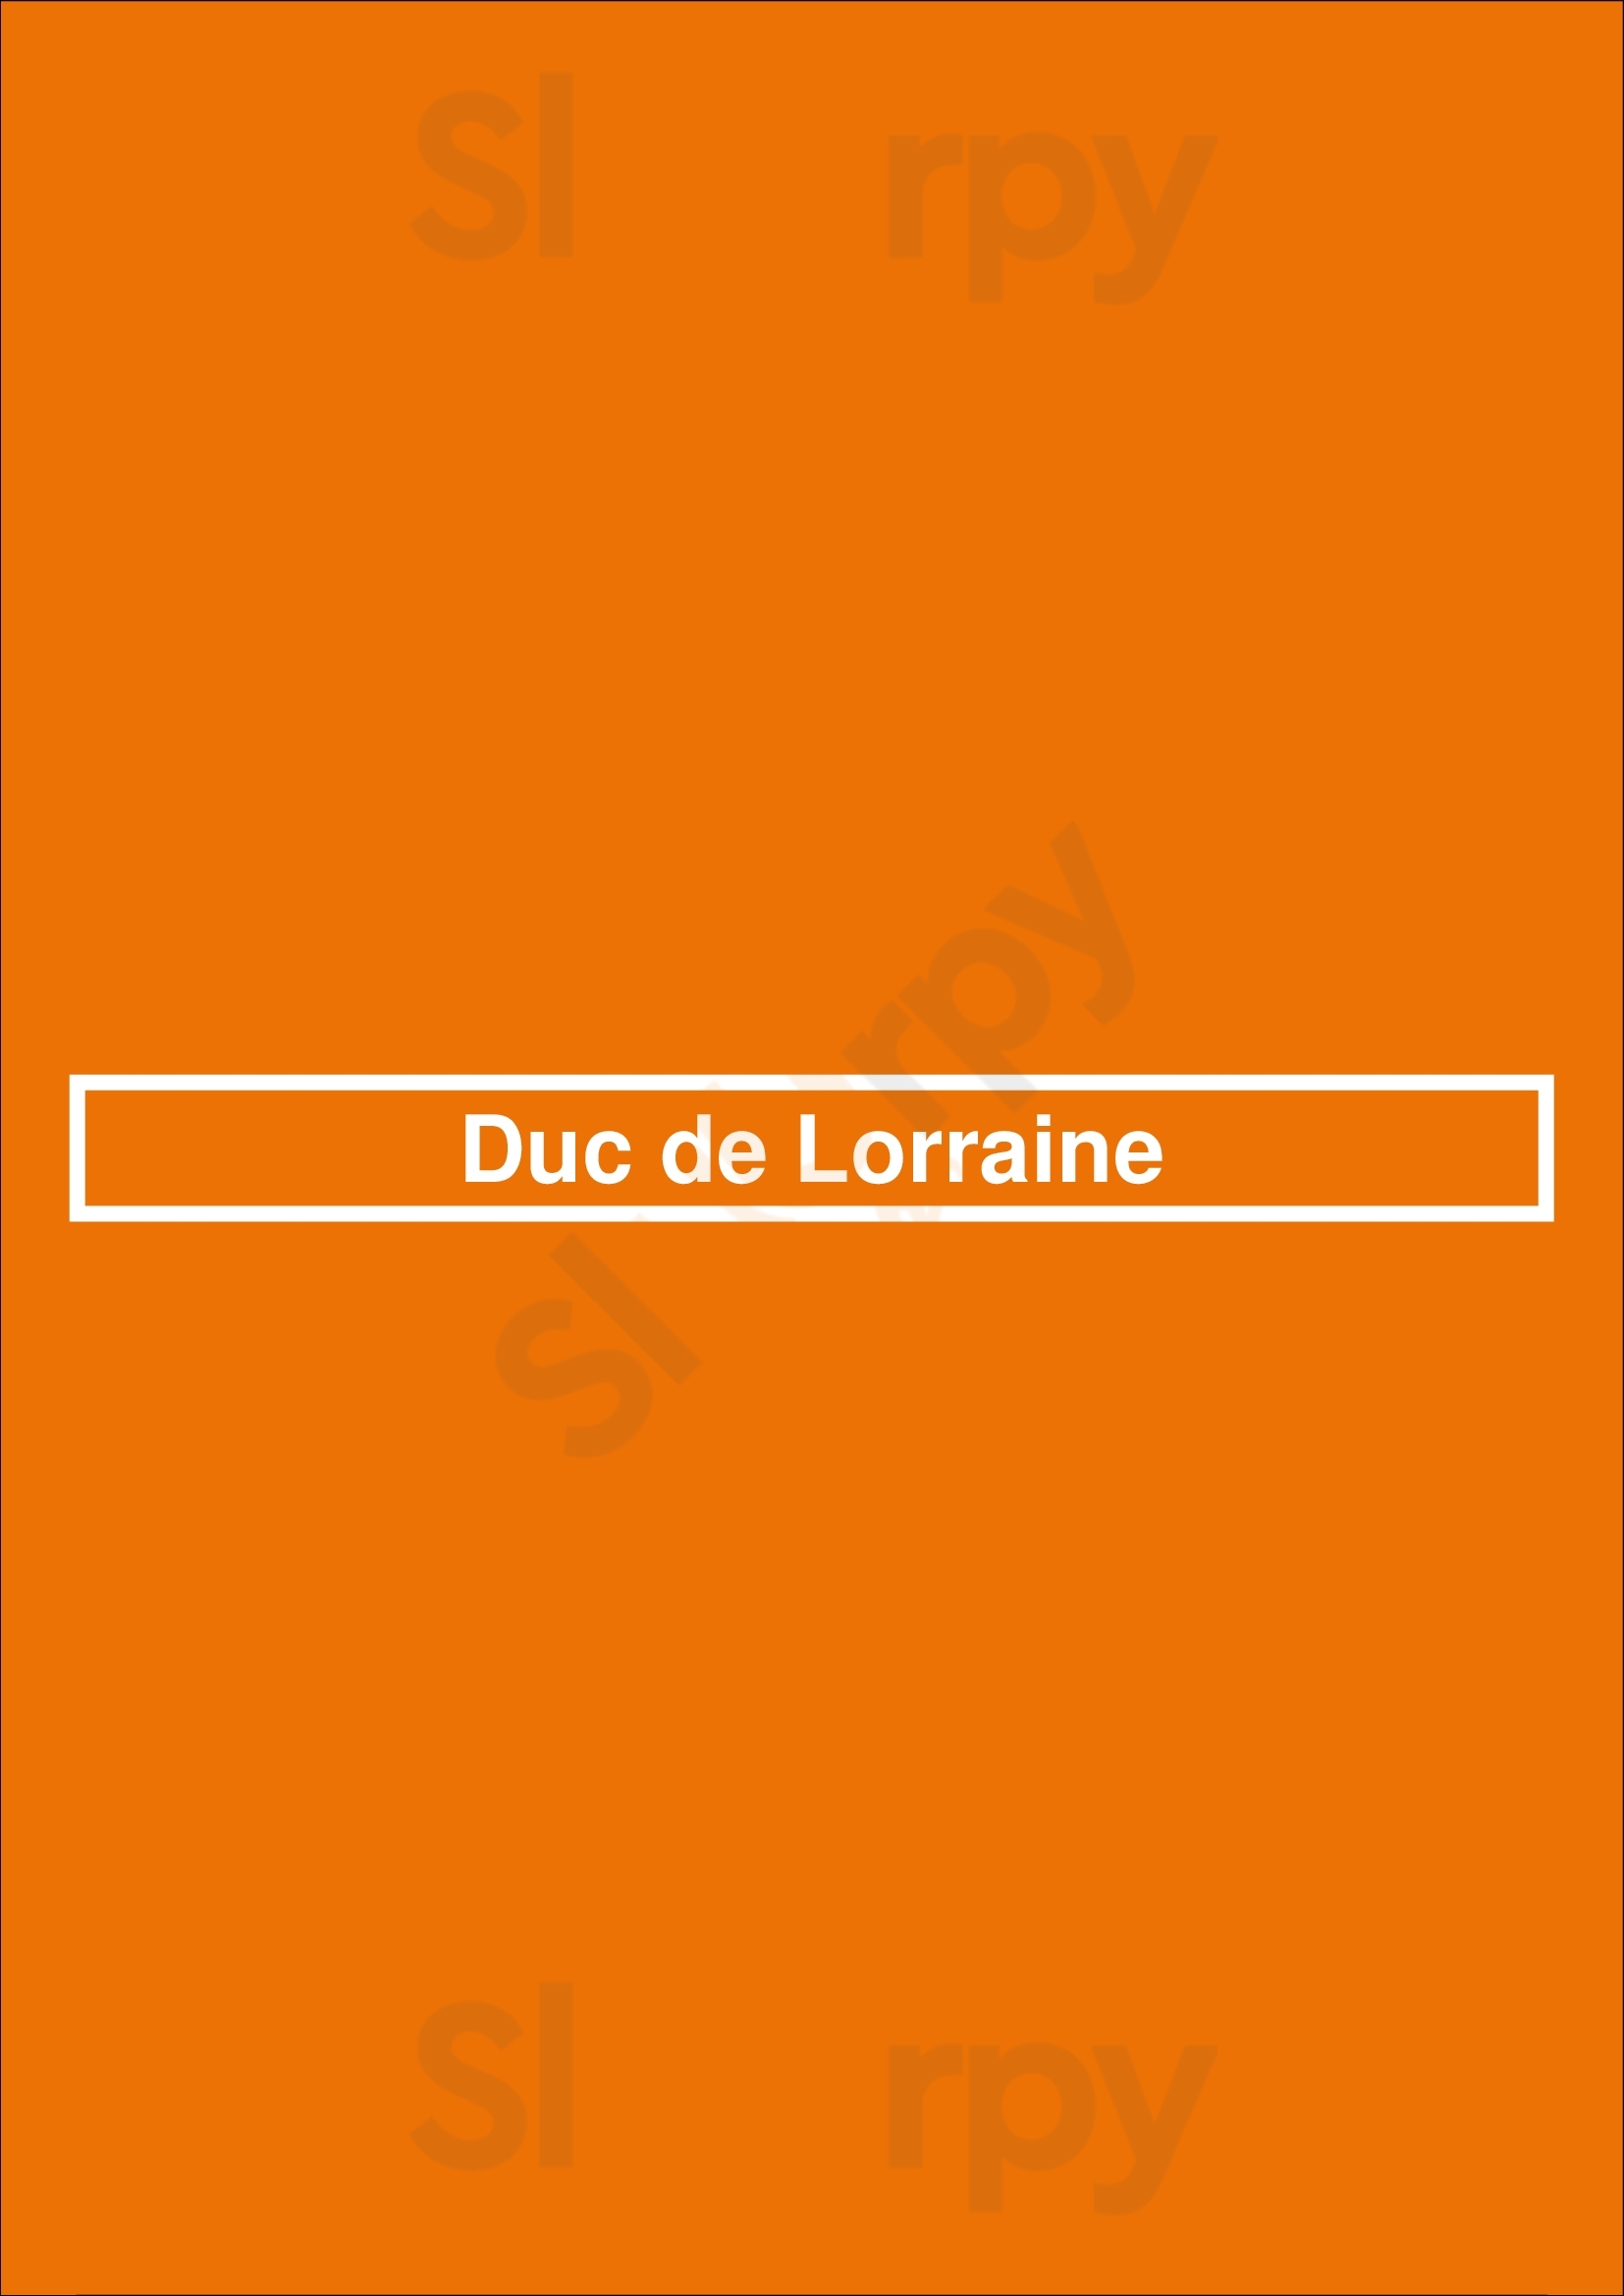 Duc De Lorraine Montreal Menu - 1